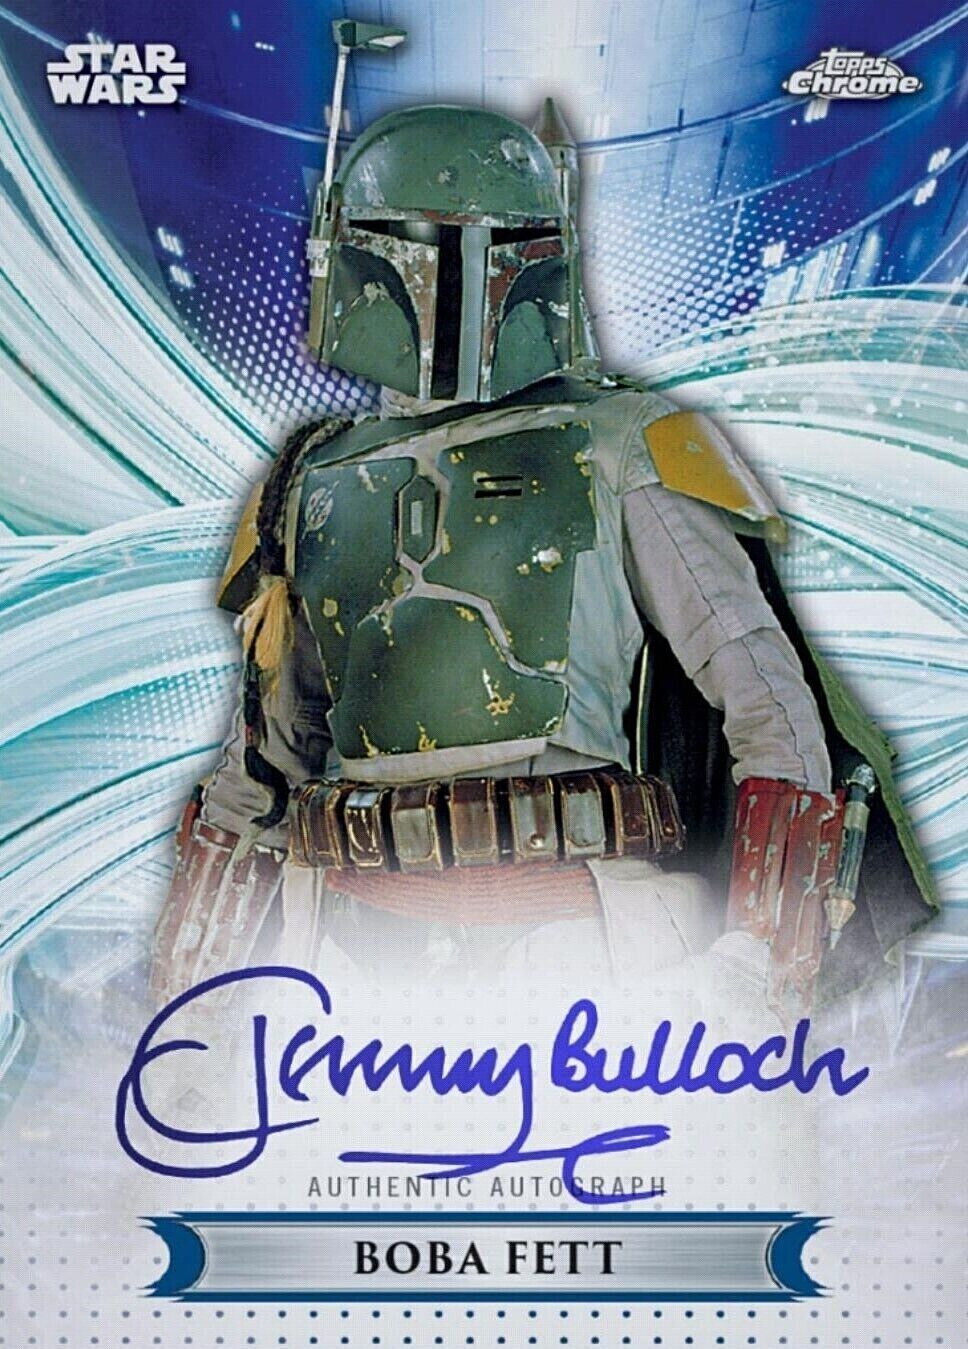 Topps Star Wars Chrome Autograph JEREMY BULLOCH as BOBA FETT SIG Digital Card